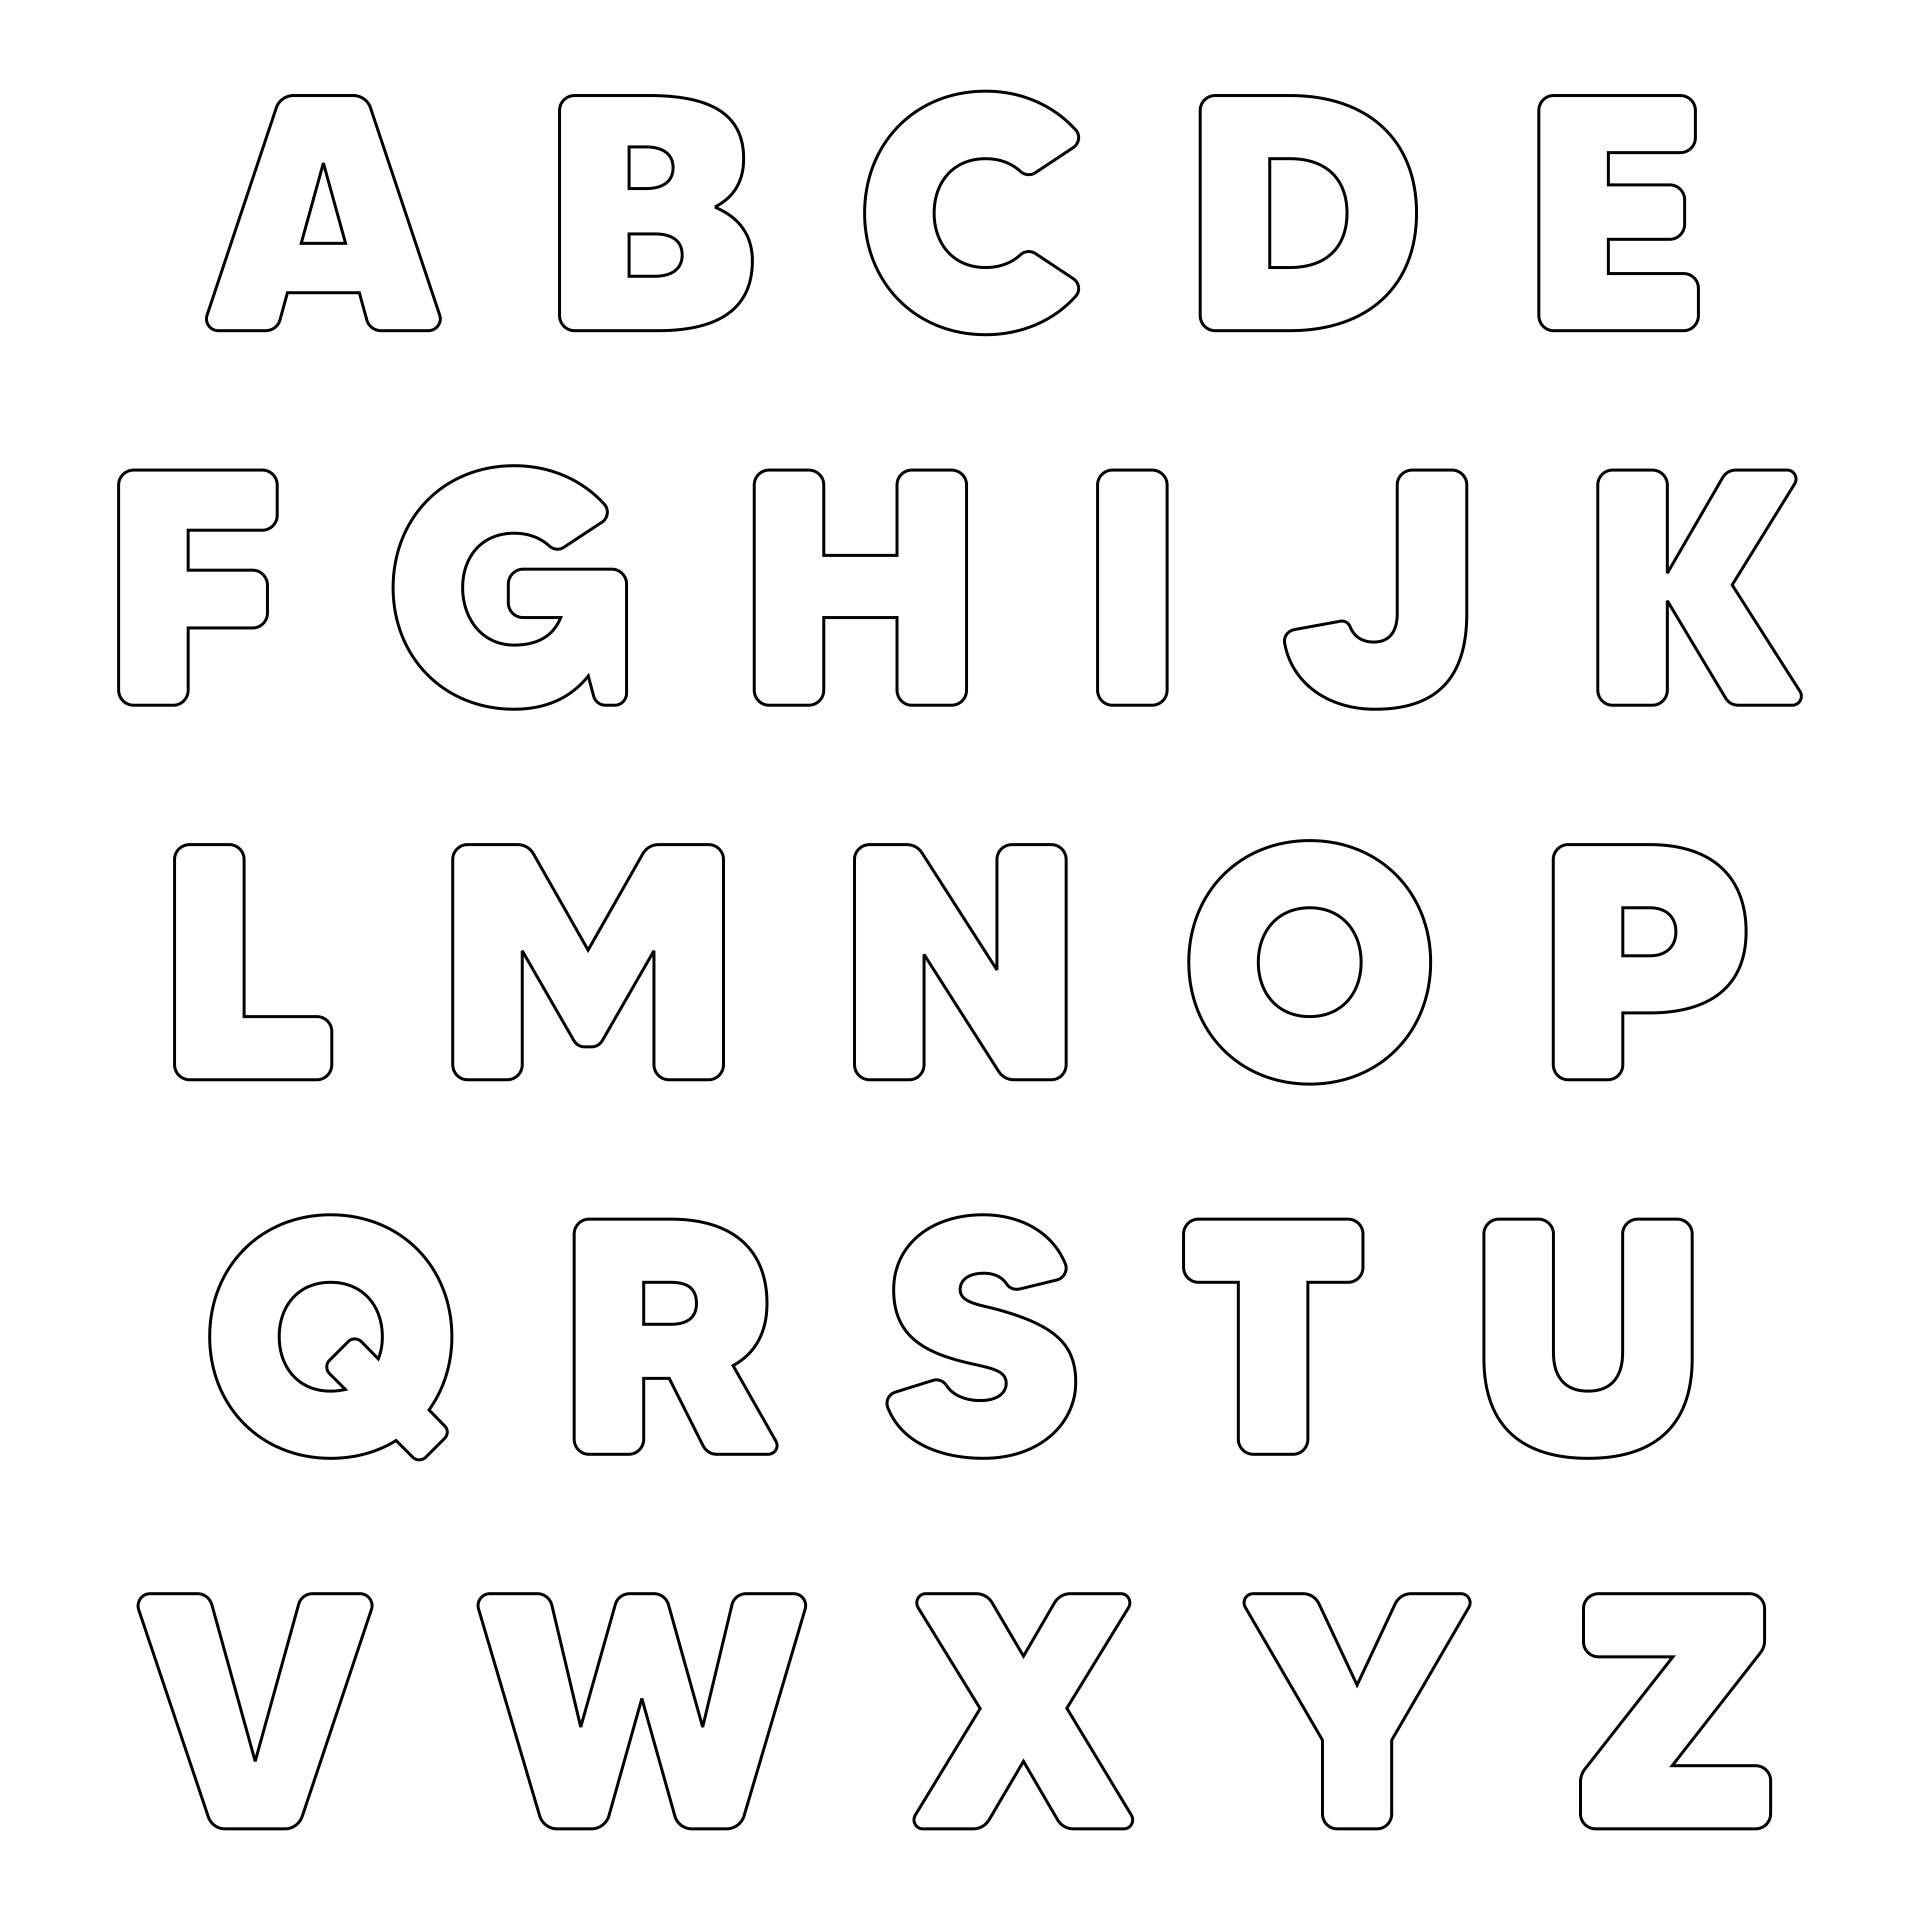 6 Best Printable Alphabet Letters To Cut